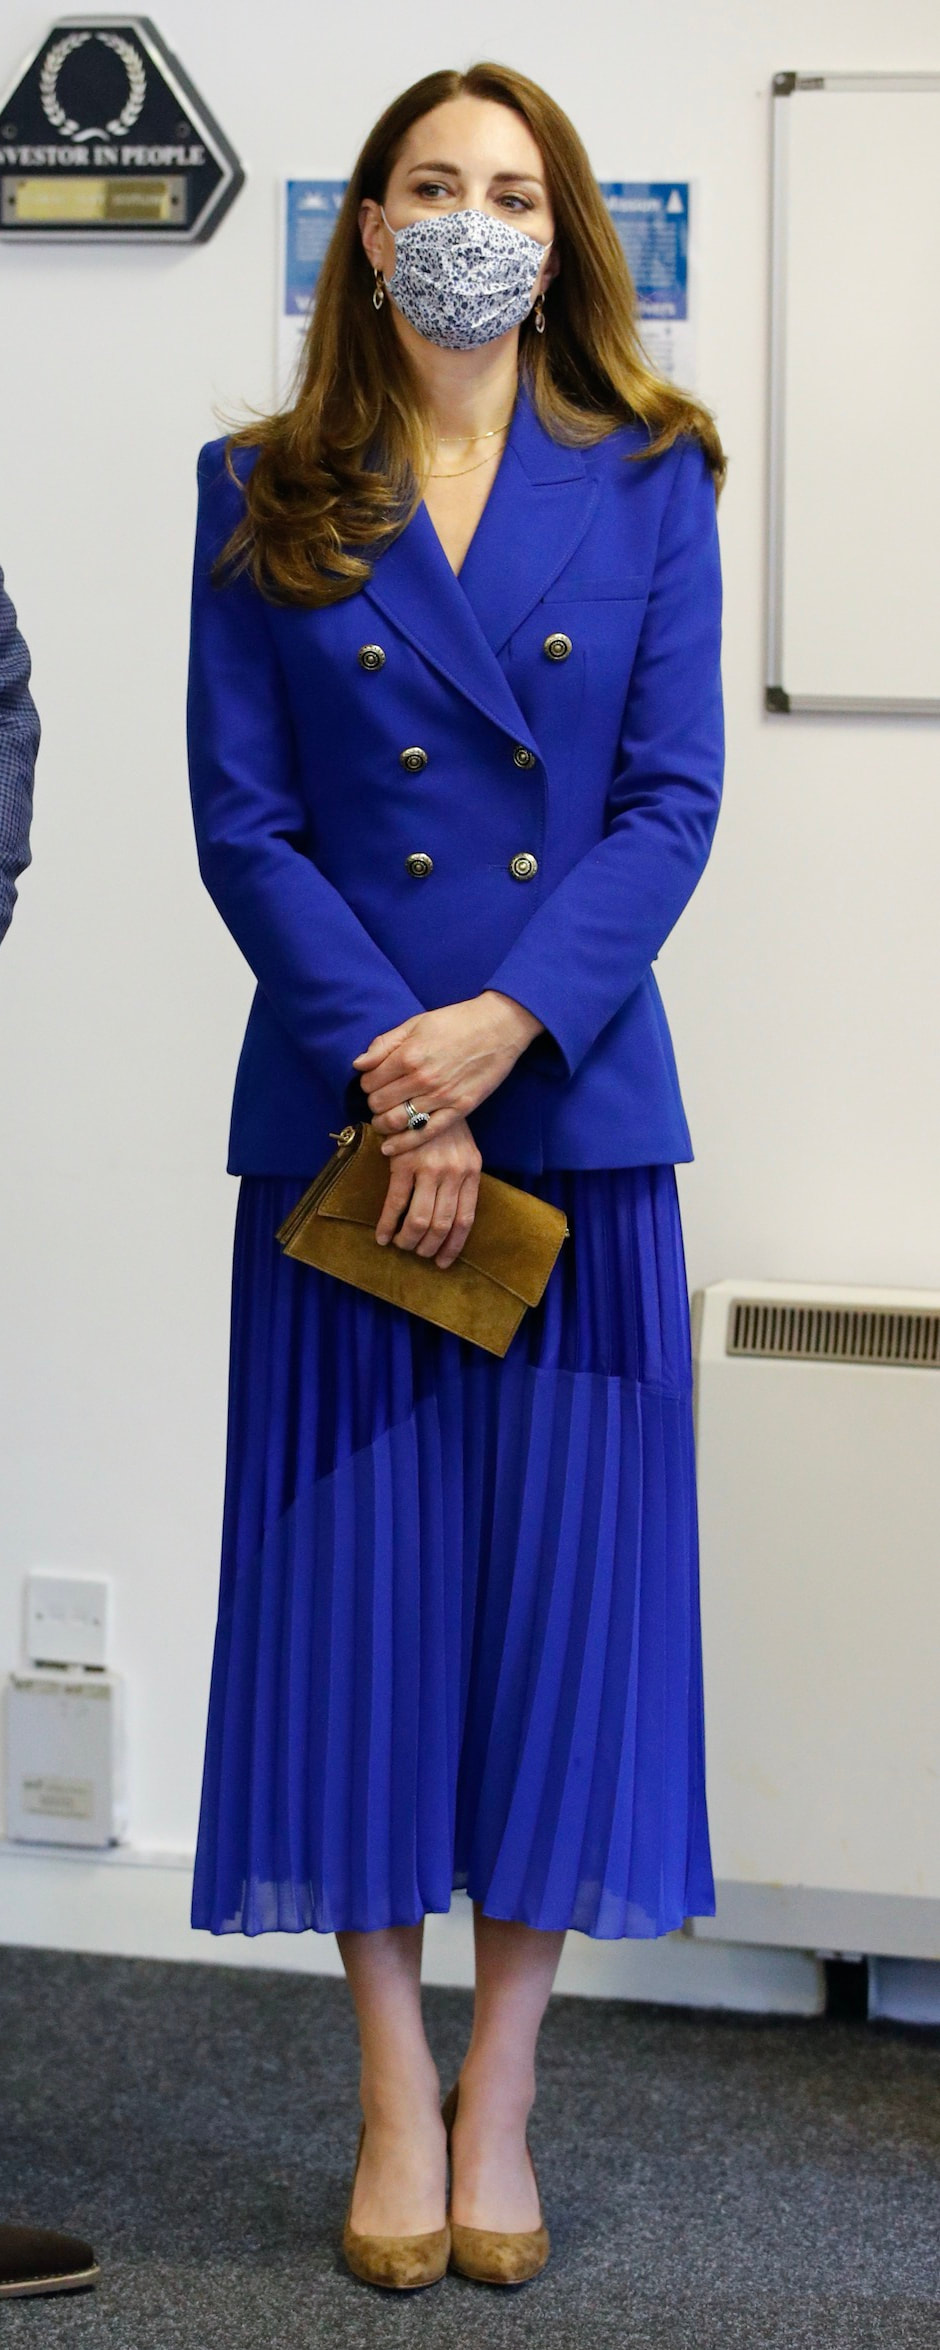 Hope Contrast Hem Pleated Skirt in Cobalt as seen on Kate Middleton, The Duchess of Cambridge.